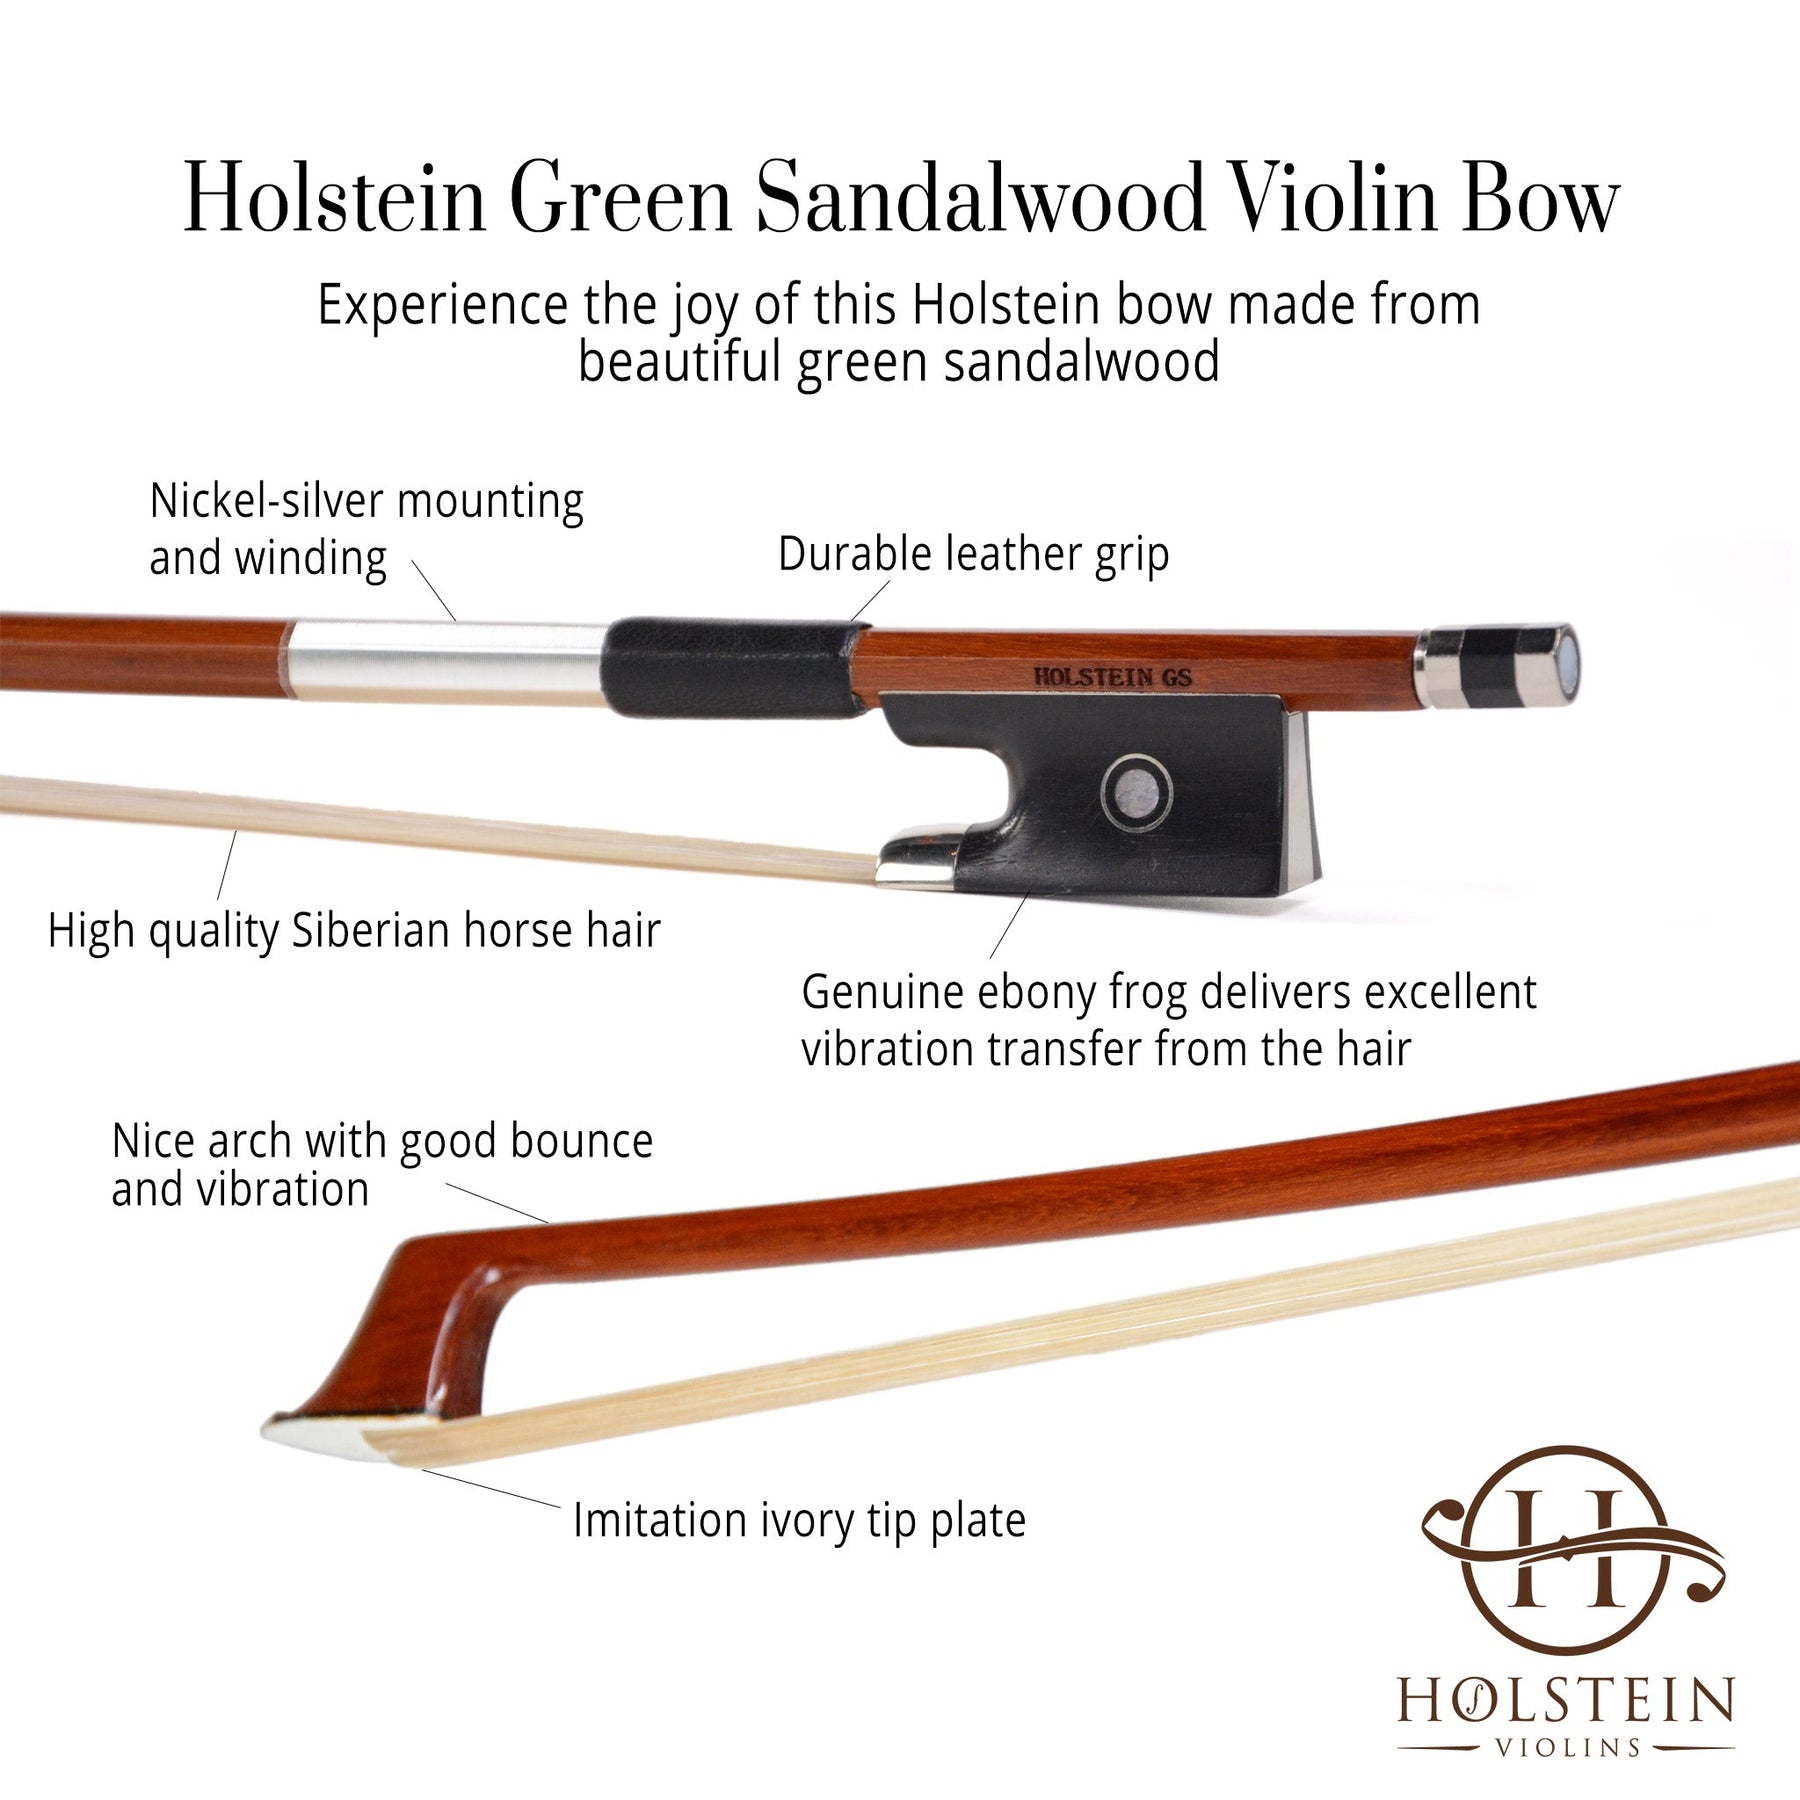 B-Stock Holstein Sandalwood Violin Bow